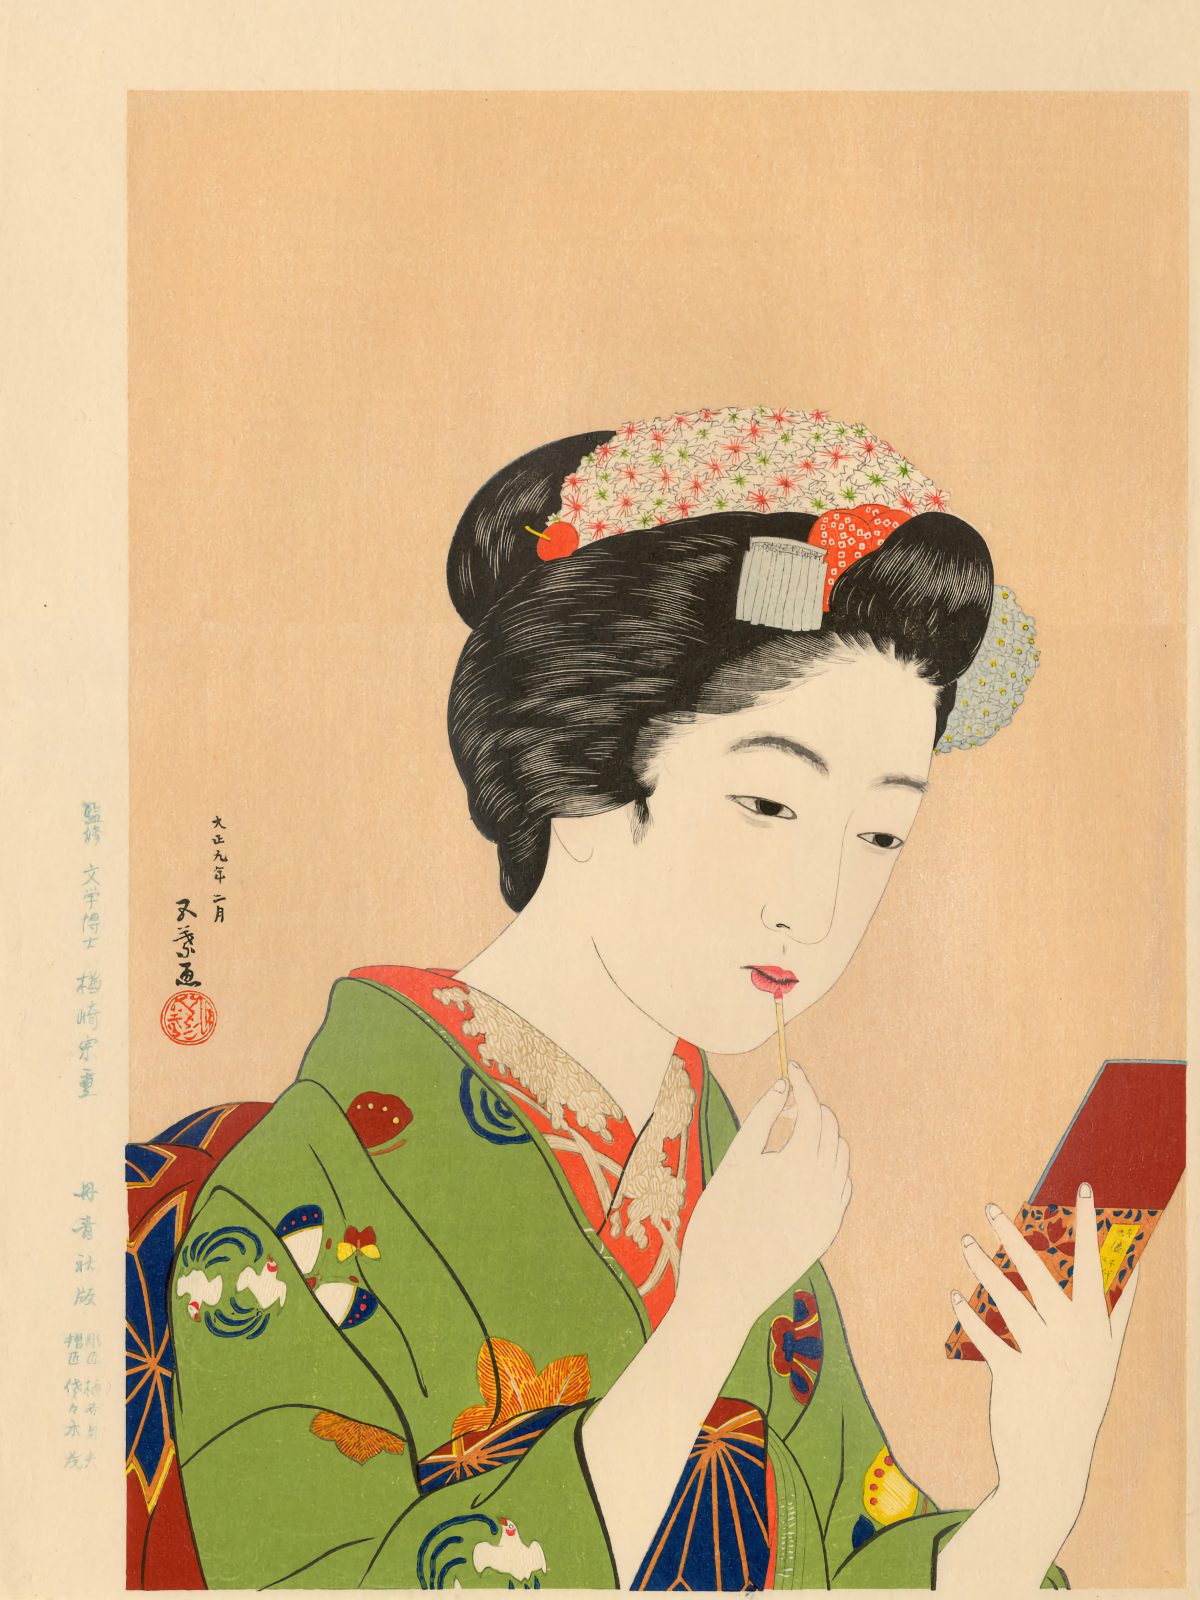 Hashiguchi Goyō and his Extraordinarily Beautiful Prints